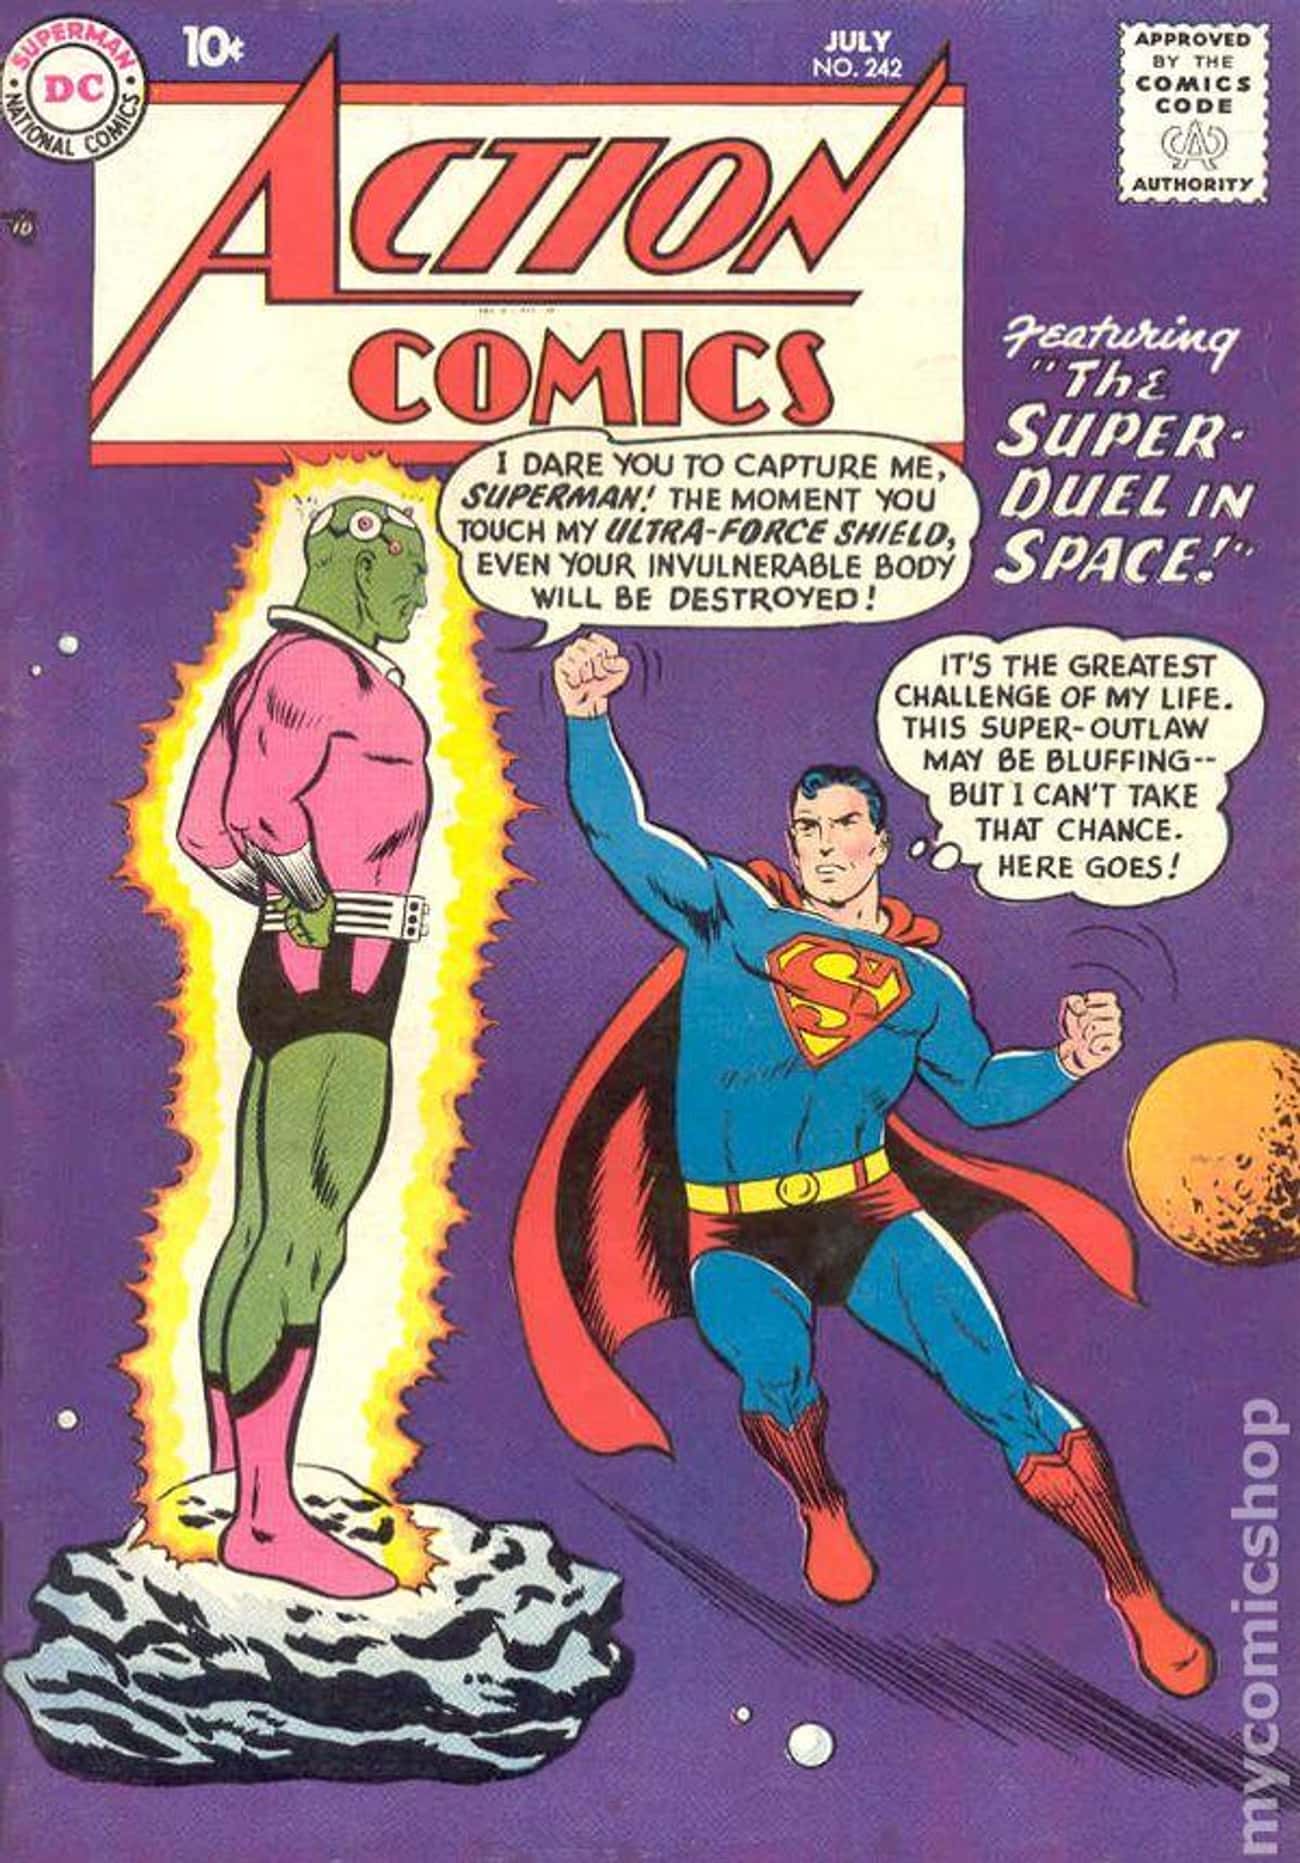 1950s Comic Book Covers Cool 50s Comic Cover Art